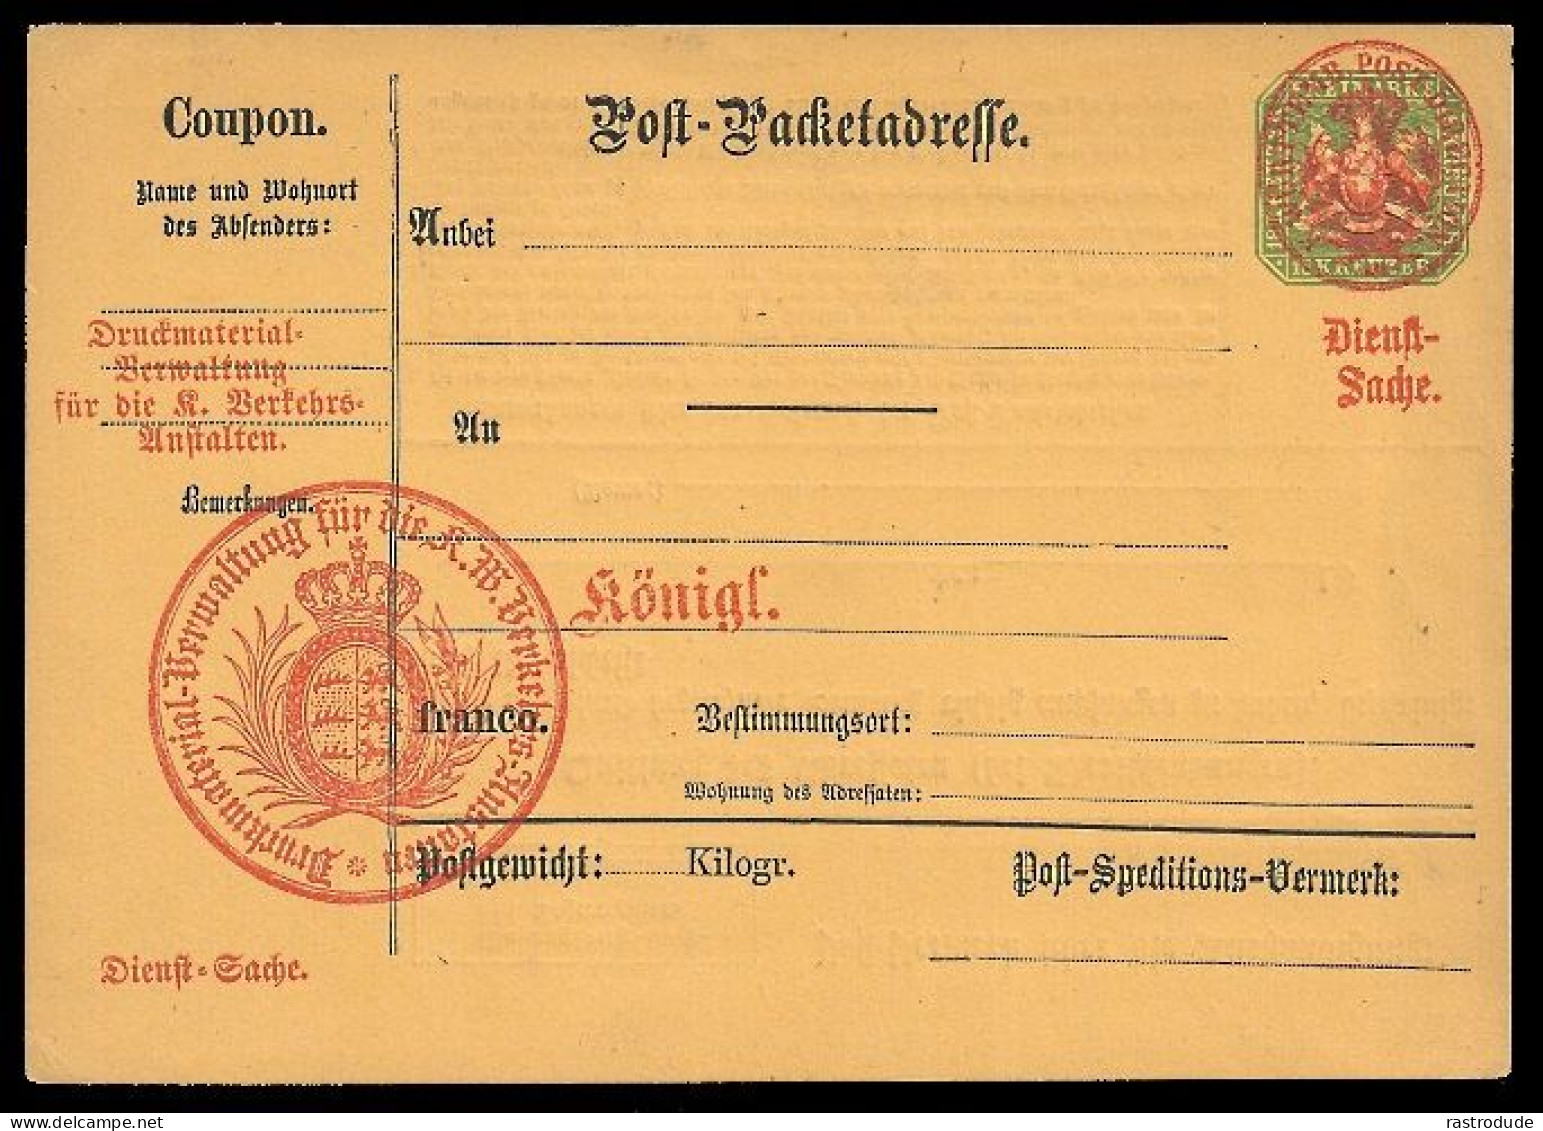 1874 WÜRTTEMBERG 18Kr POST PAKETKARTE Mi.-Nr. 1 MIT ROTEM DIENSTSIEGEL ALS FORMULAR - Postal  Stationery